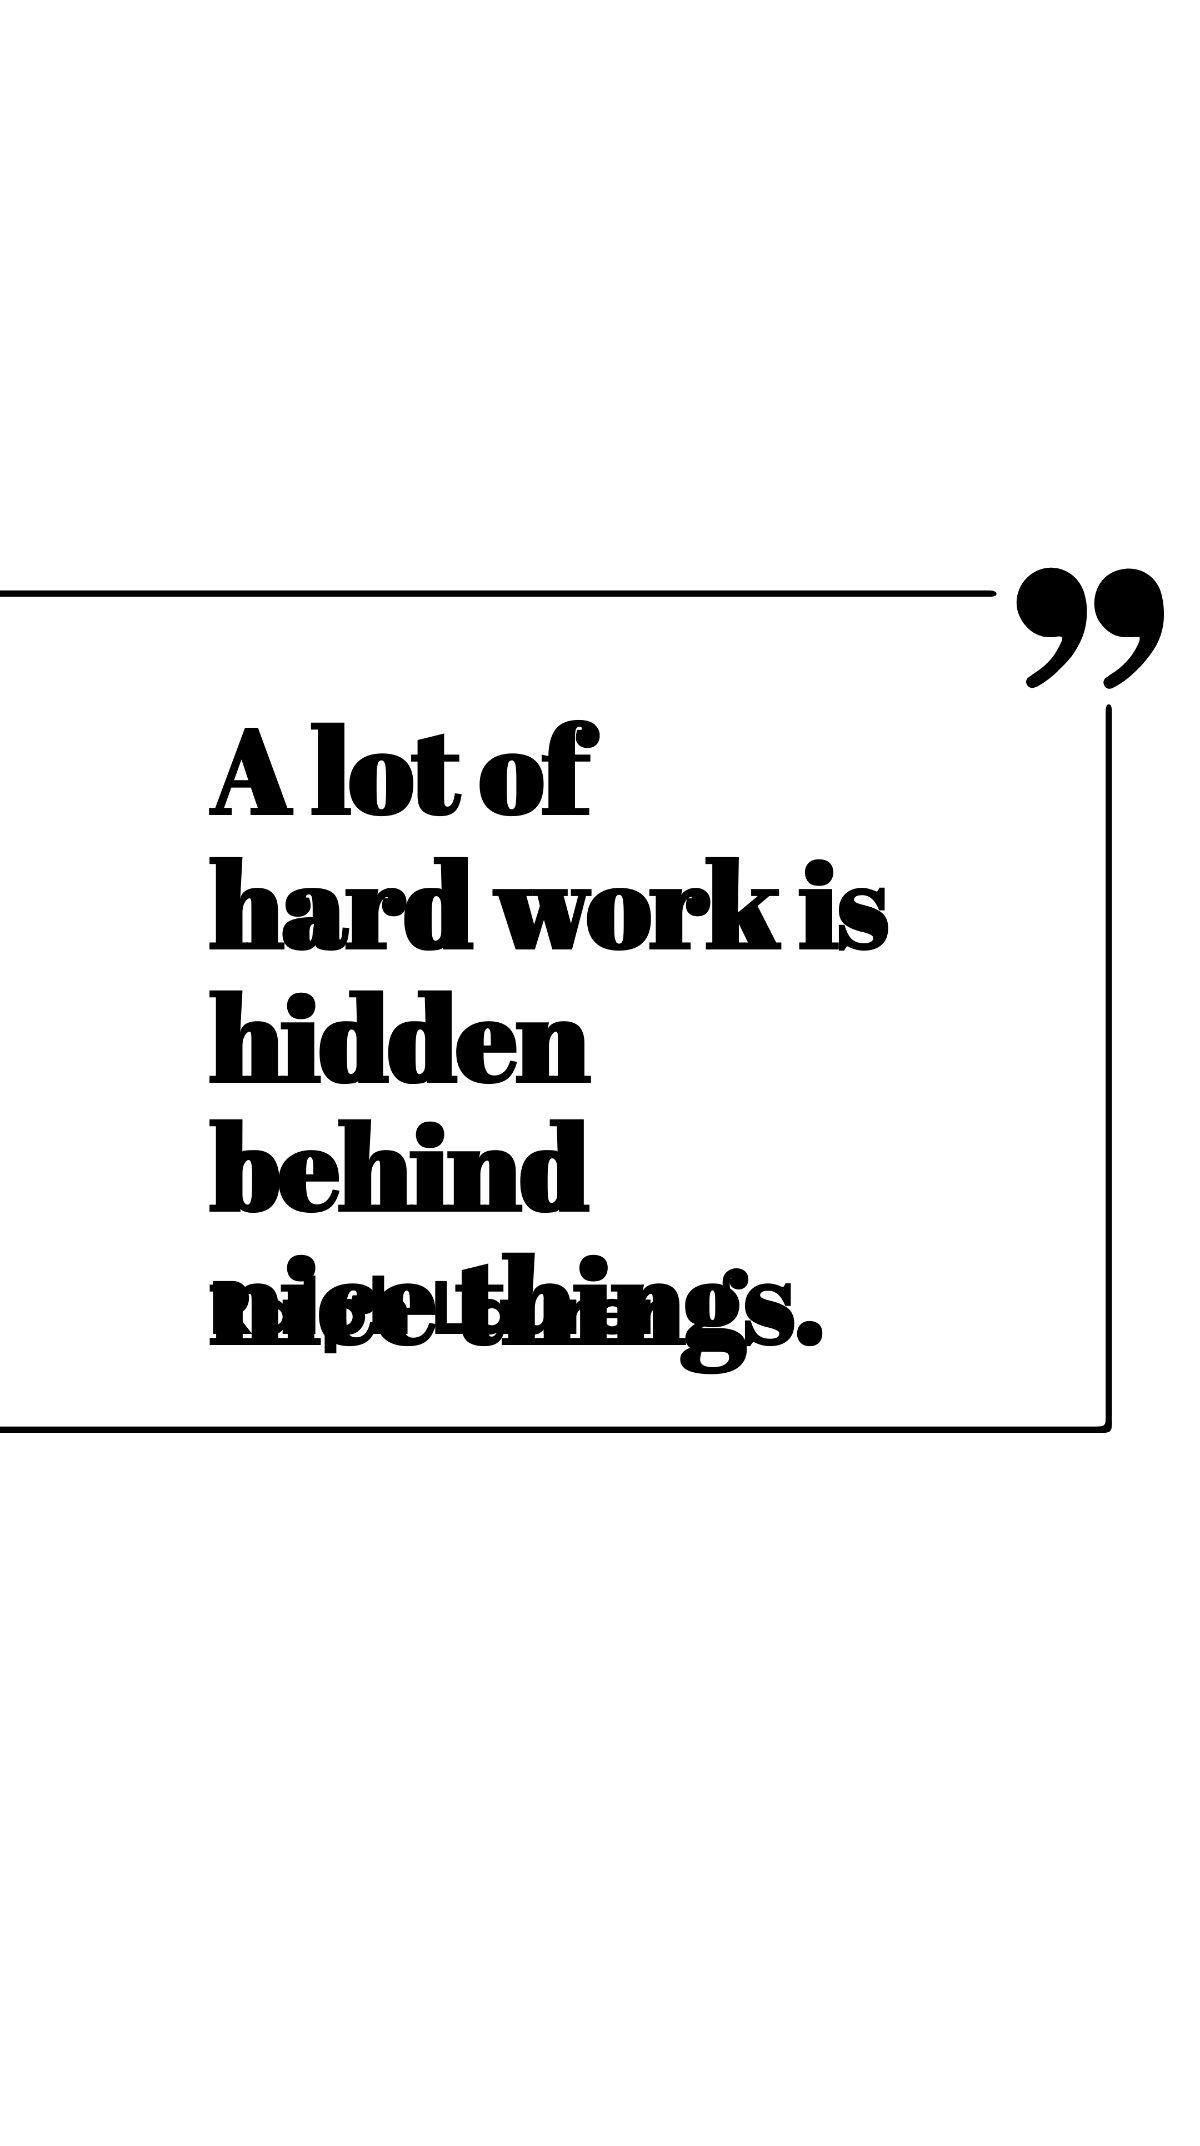 Ralph Lauren - A lot of hard work is hidden behind nice things.